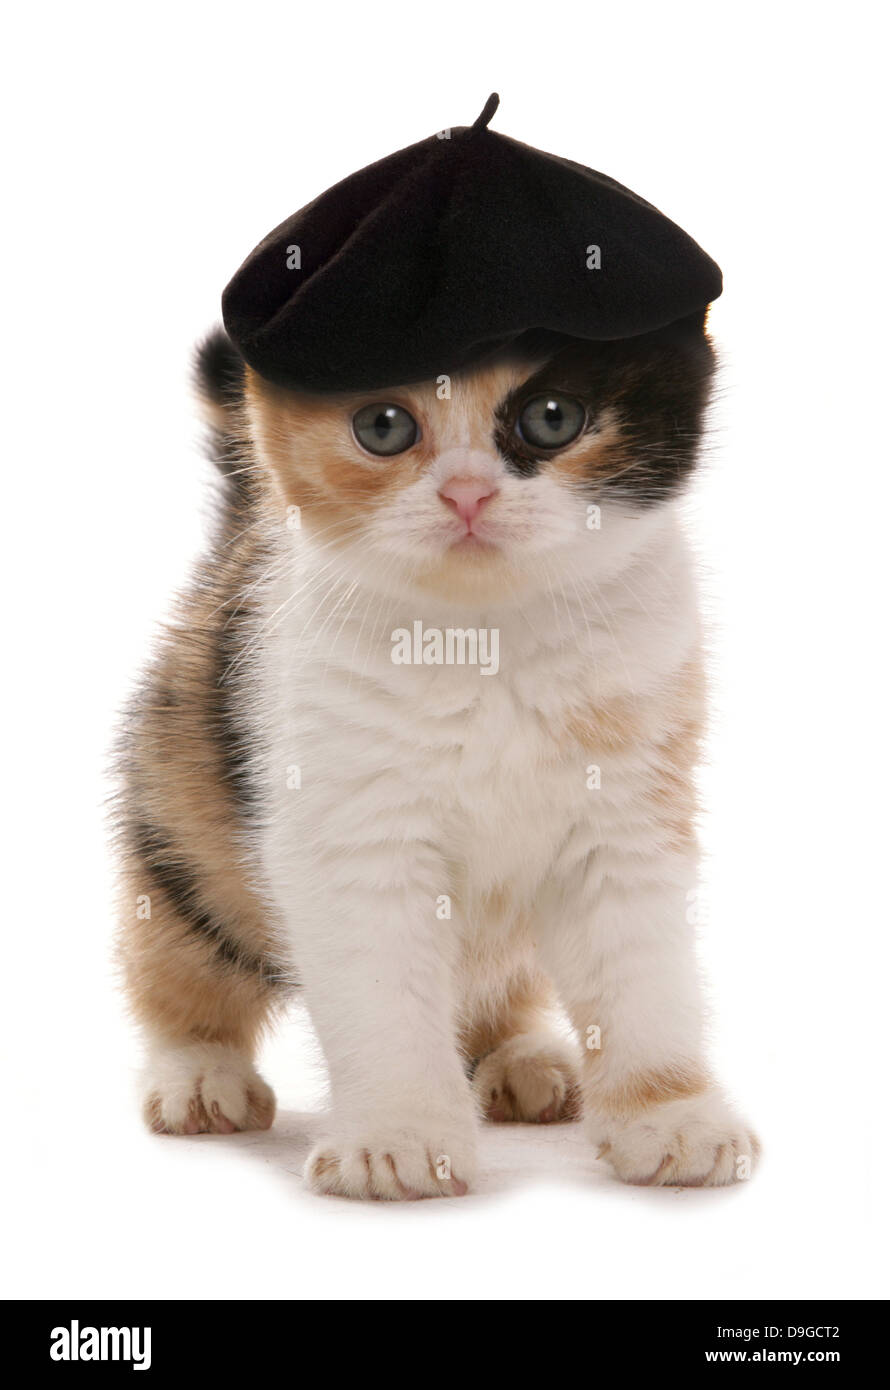 kitten with artist beret hat Stock Photo